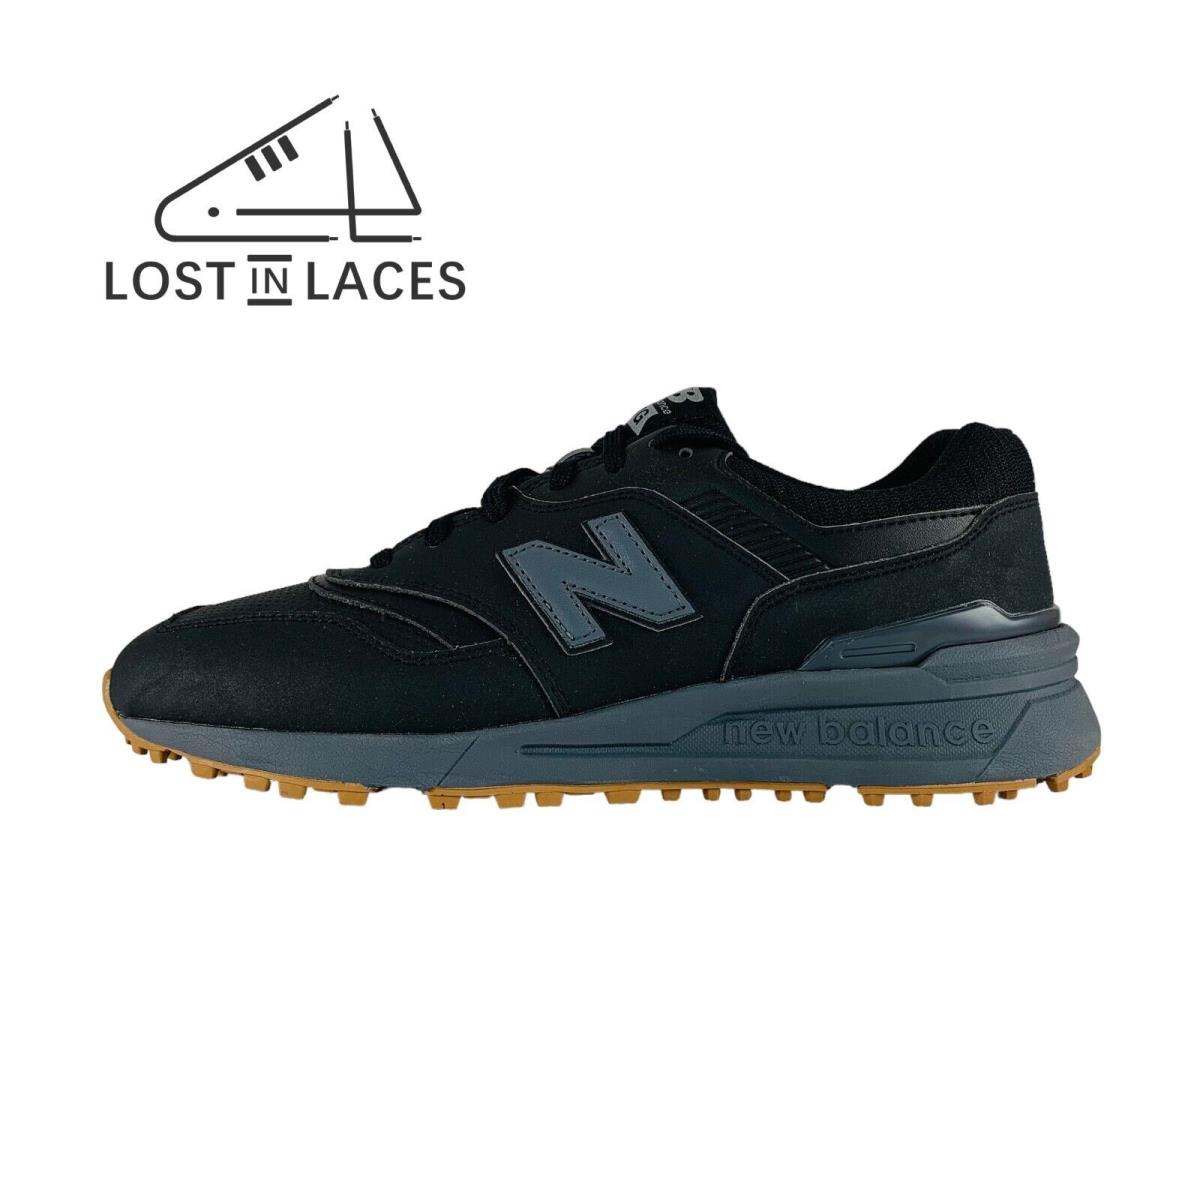 New Balance 997 SL Golf Spikeless Black Grey Gum New Men`s Golf Shoes MG997SBG